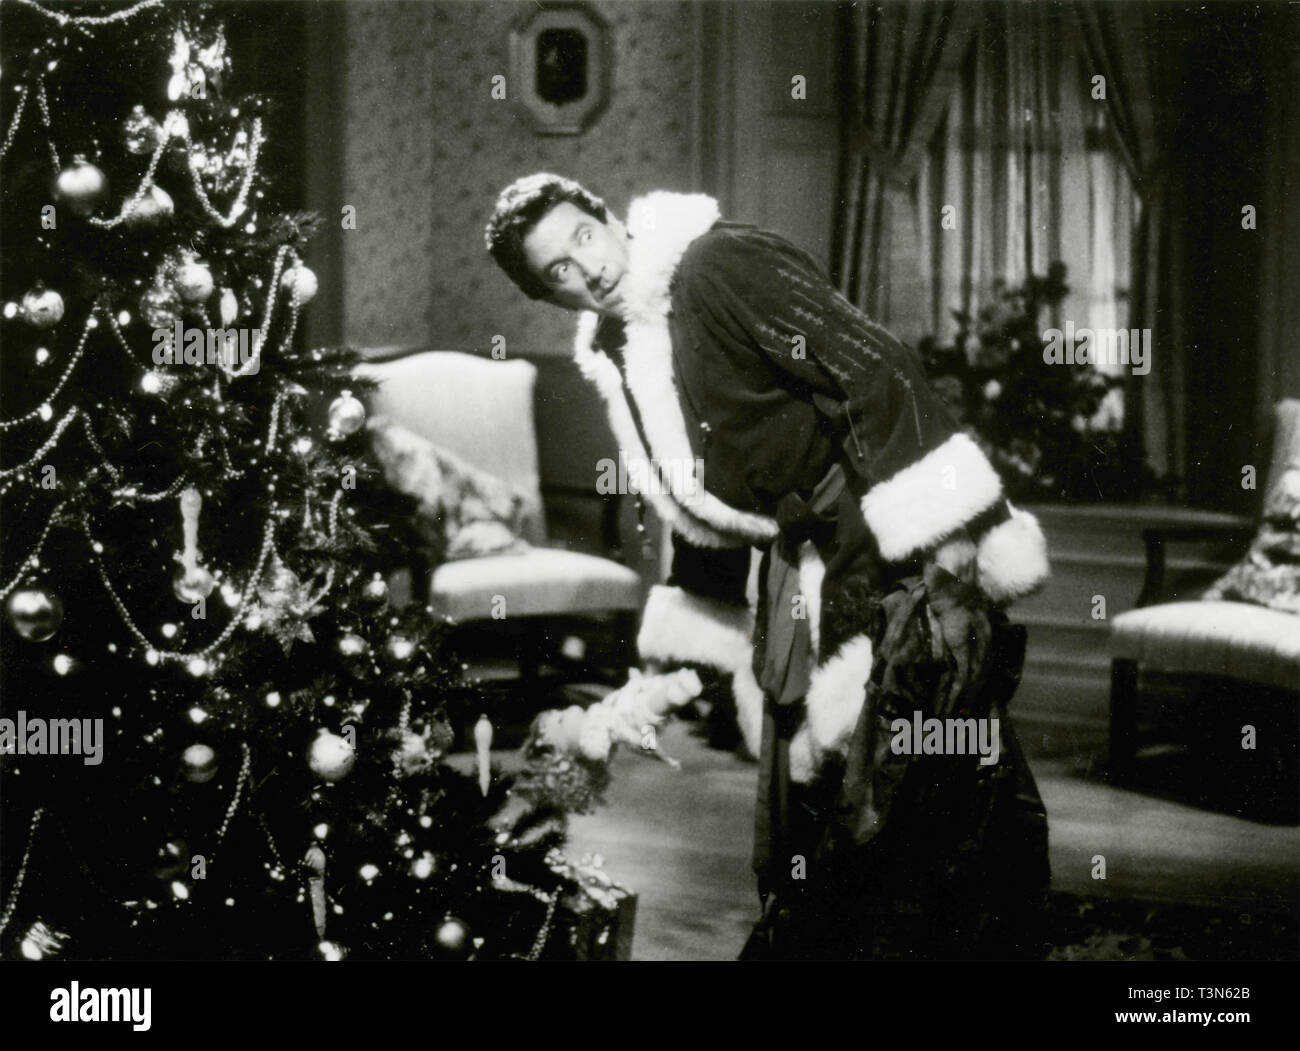 Actor Tim Allen in the movie Santa Clause, 1994 Stock Photo